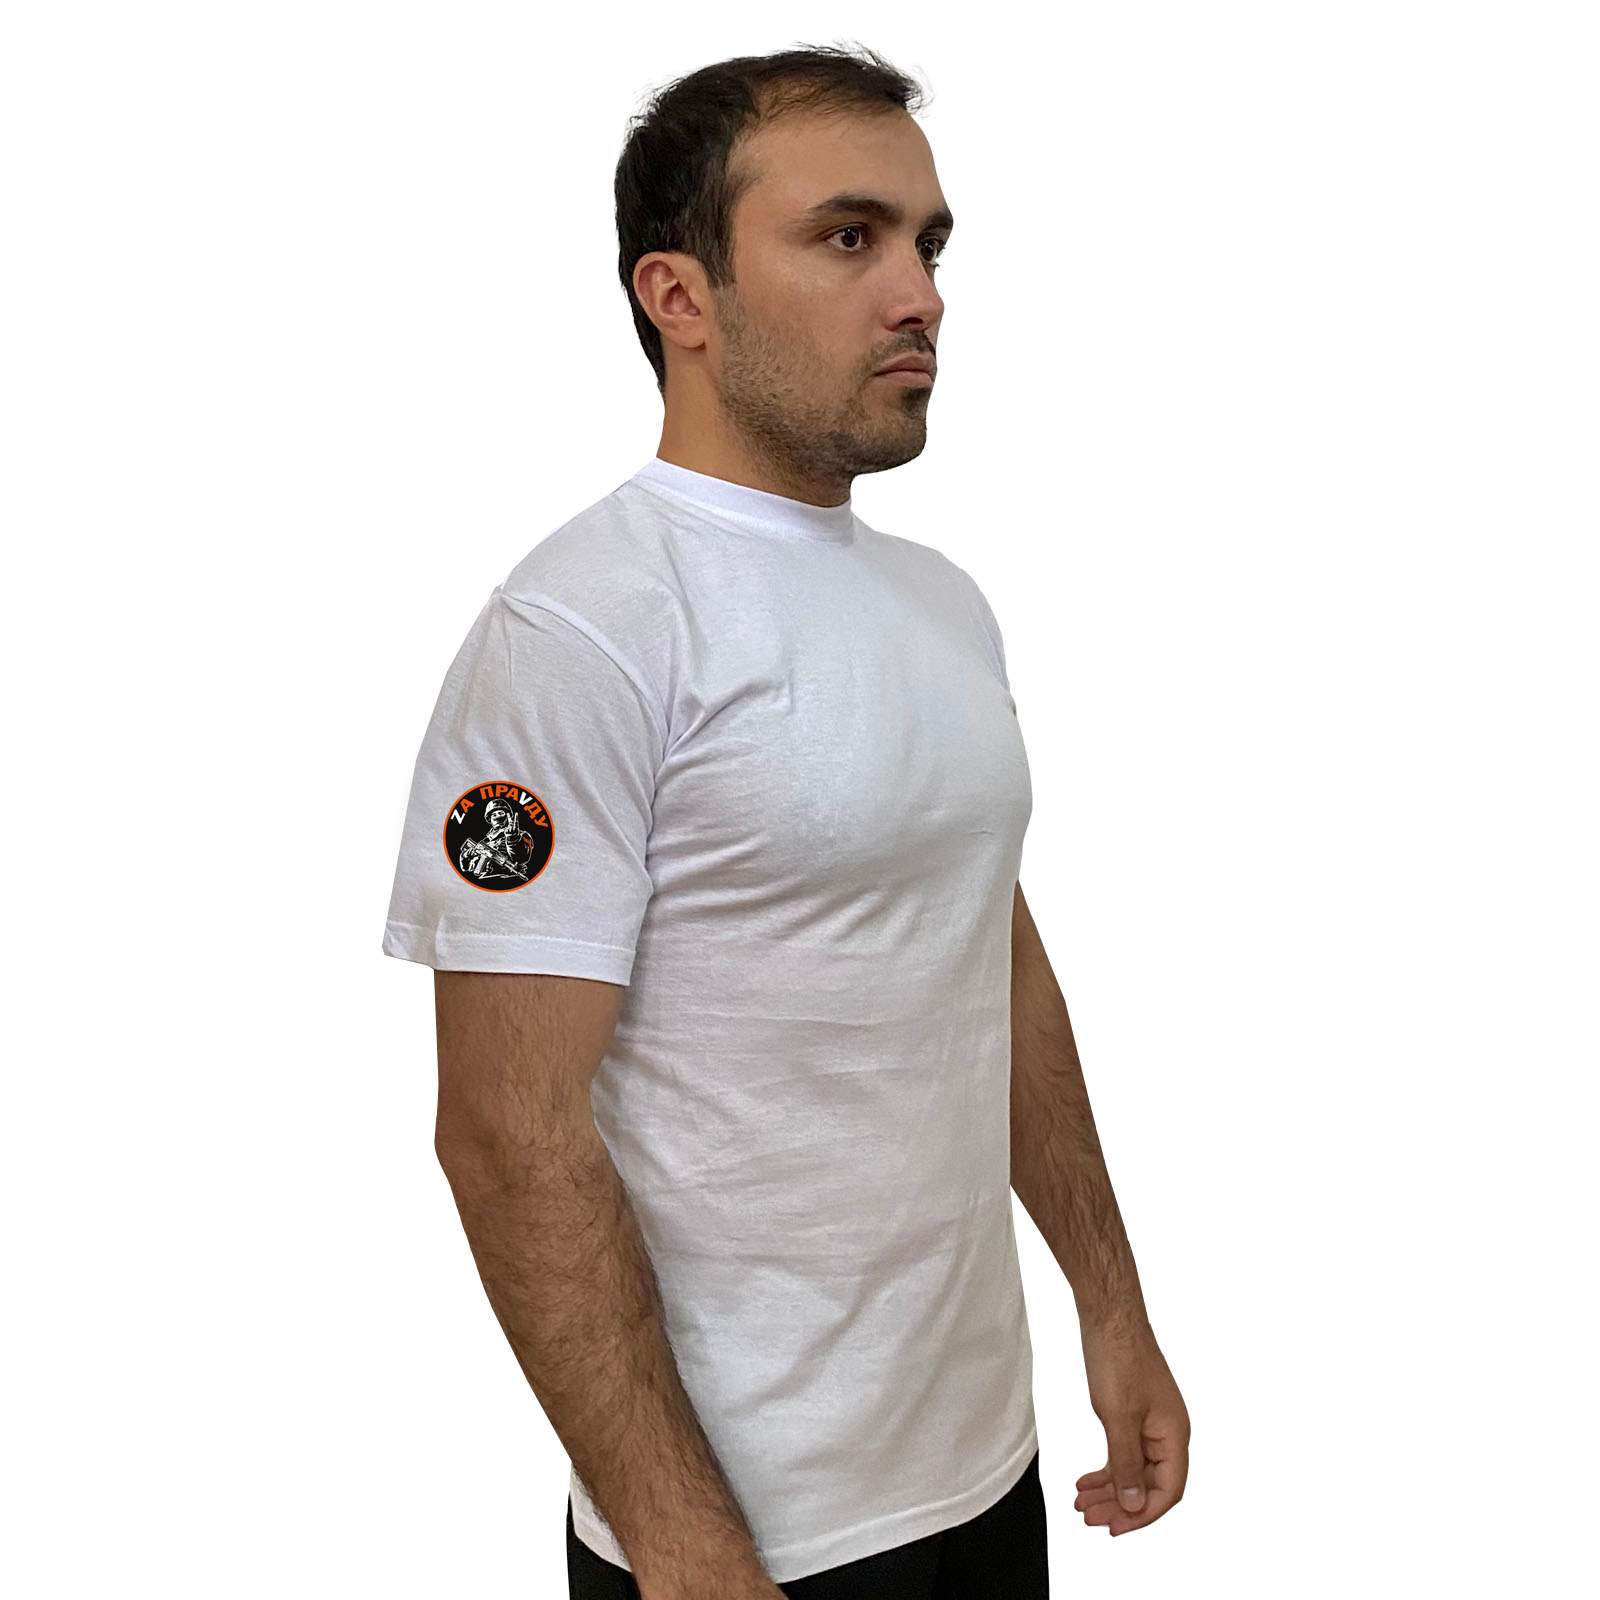 Белая футболка "Zа праVду" с термотрансфером на рукаве